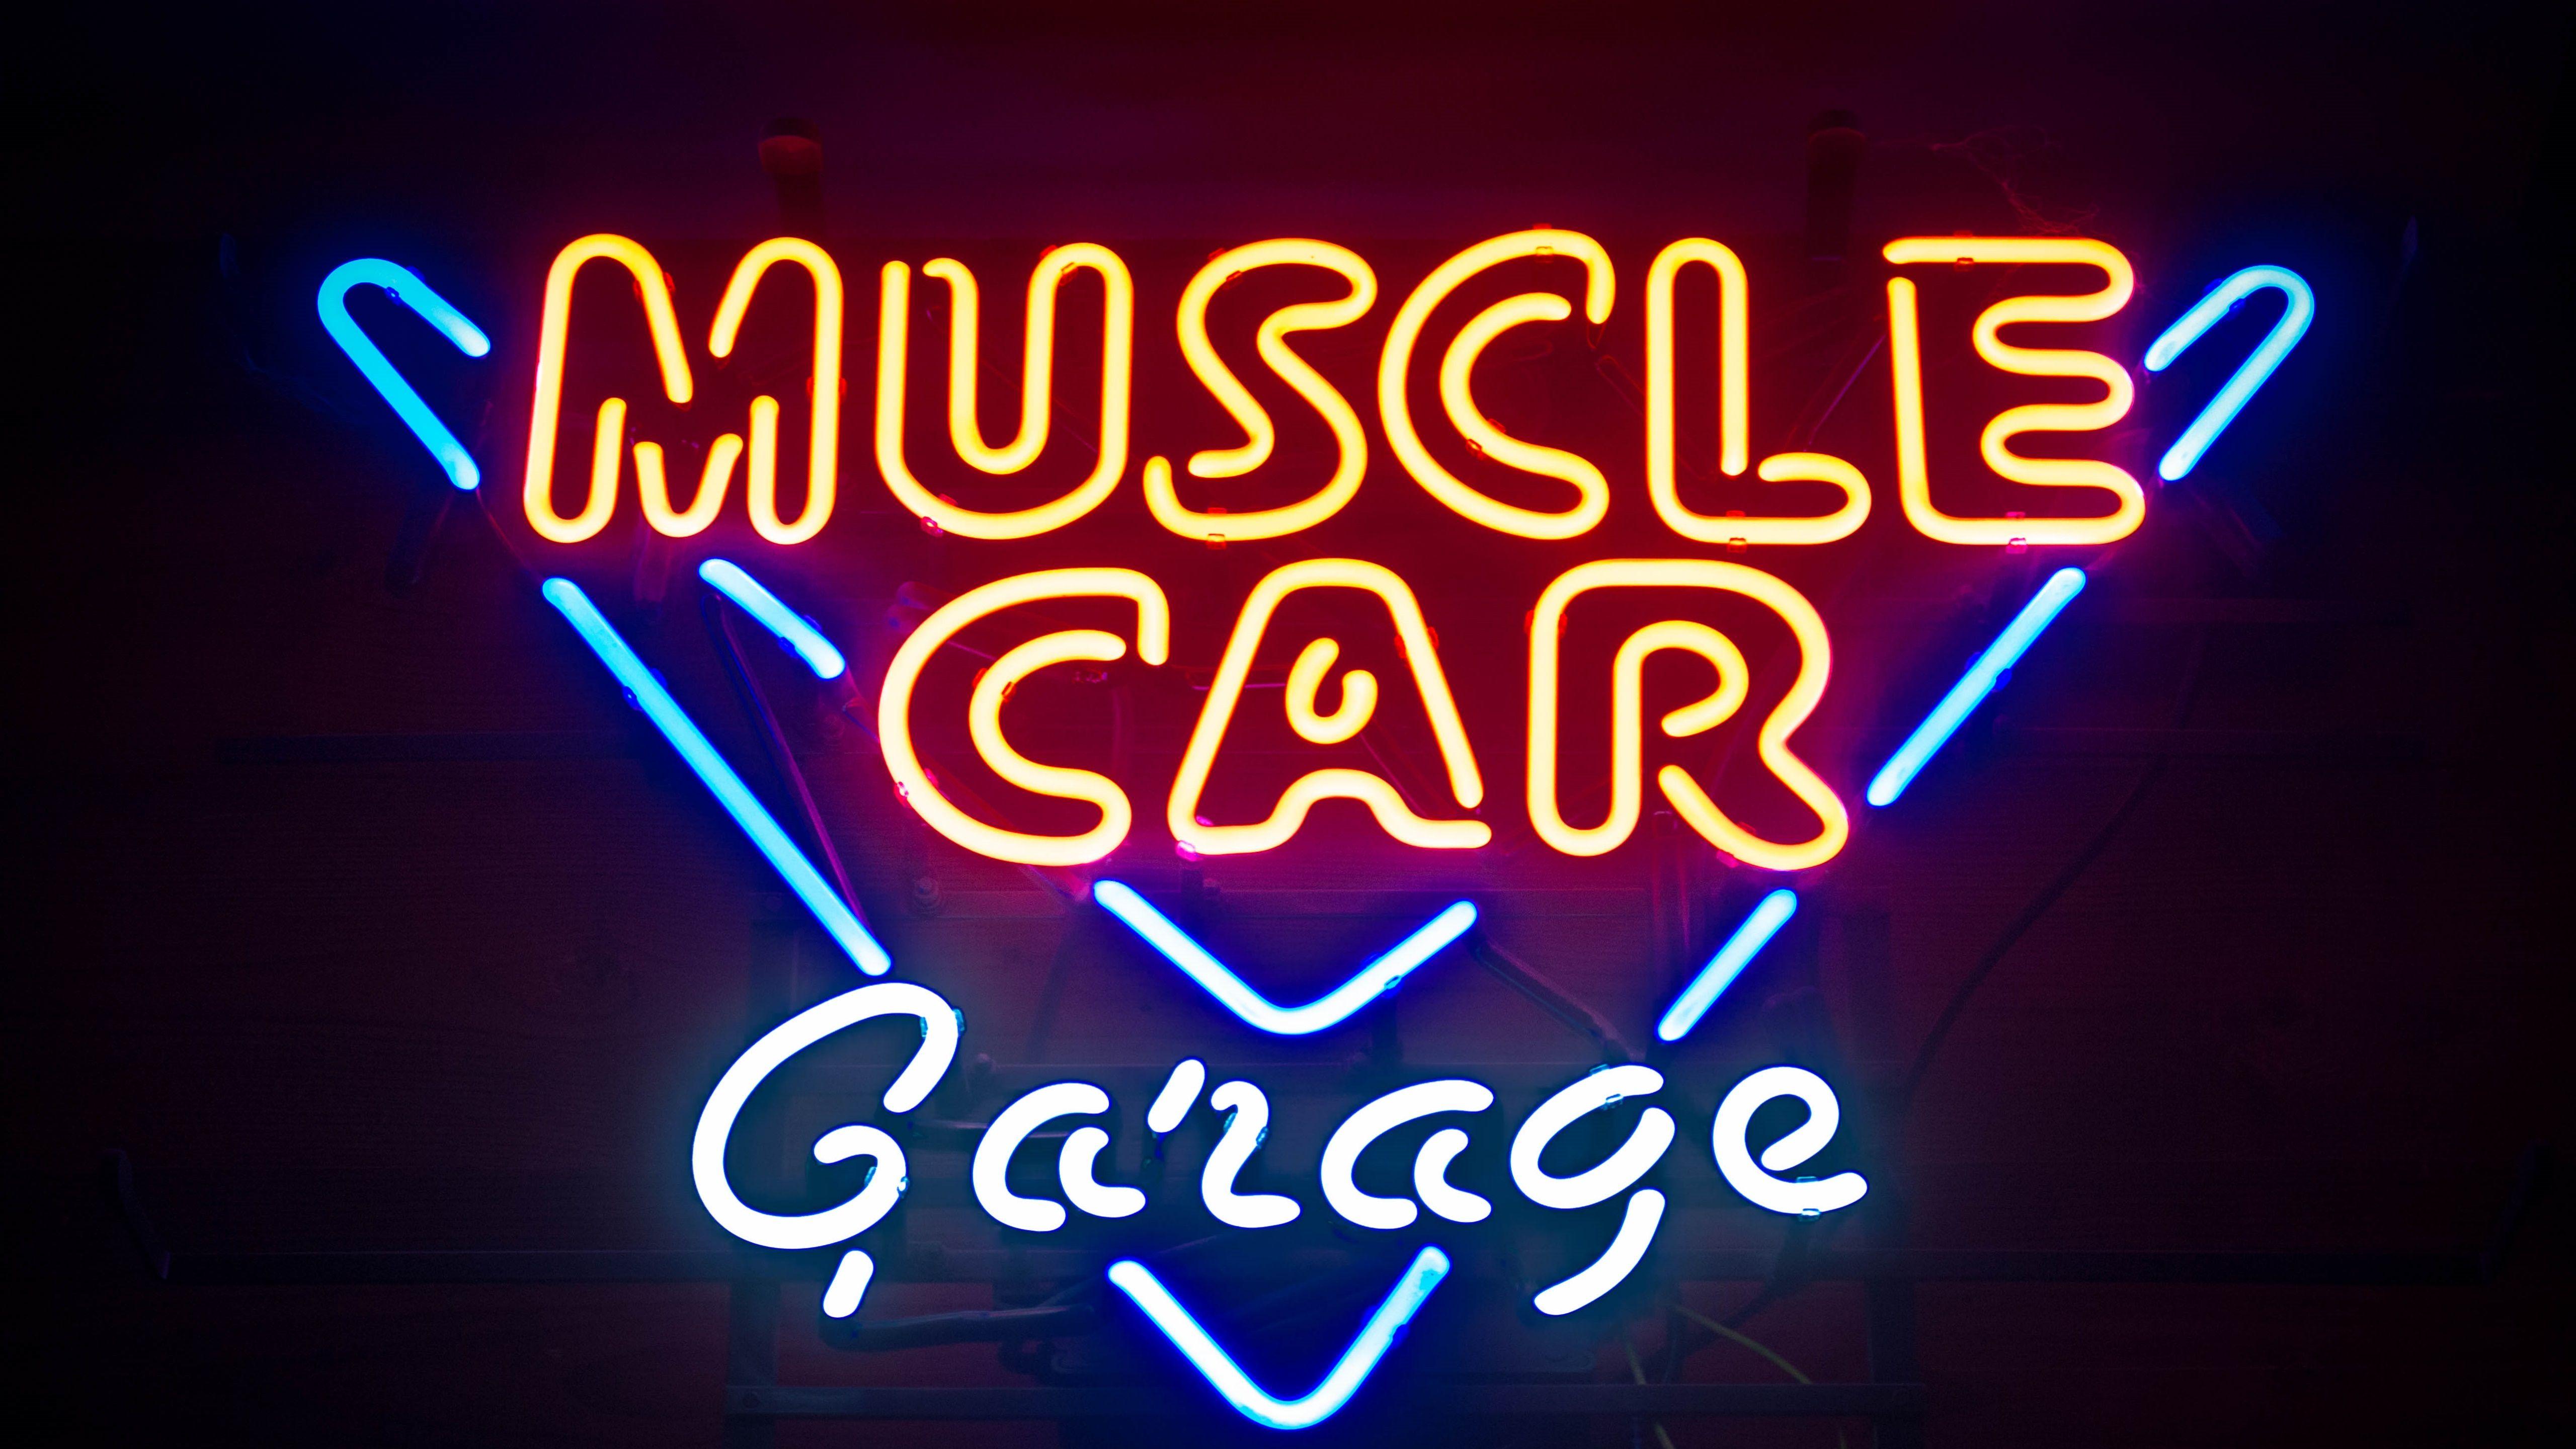 Muscle Car Garage Neon Sign Wallpaper. Wallpaper Studio 10. Tens